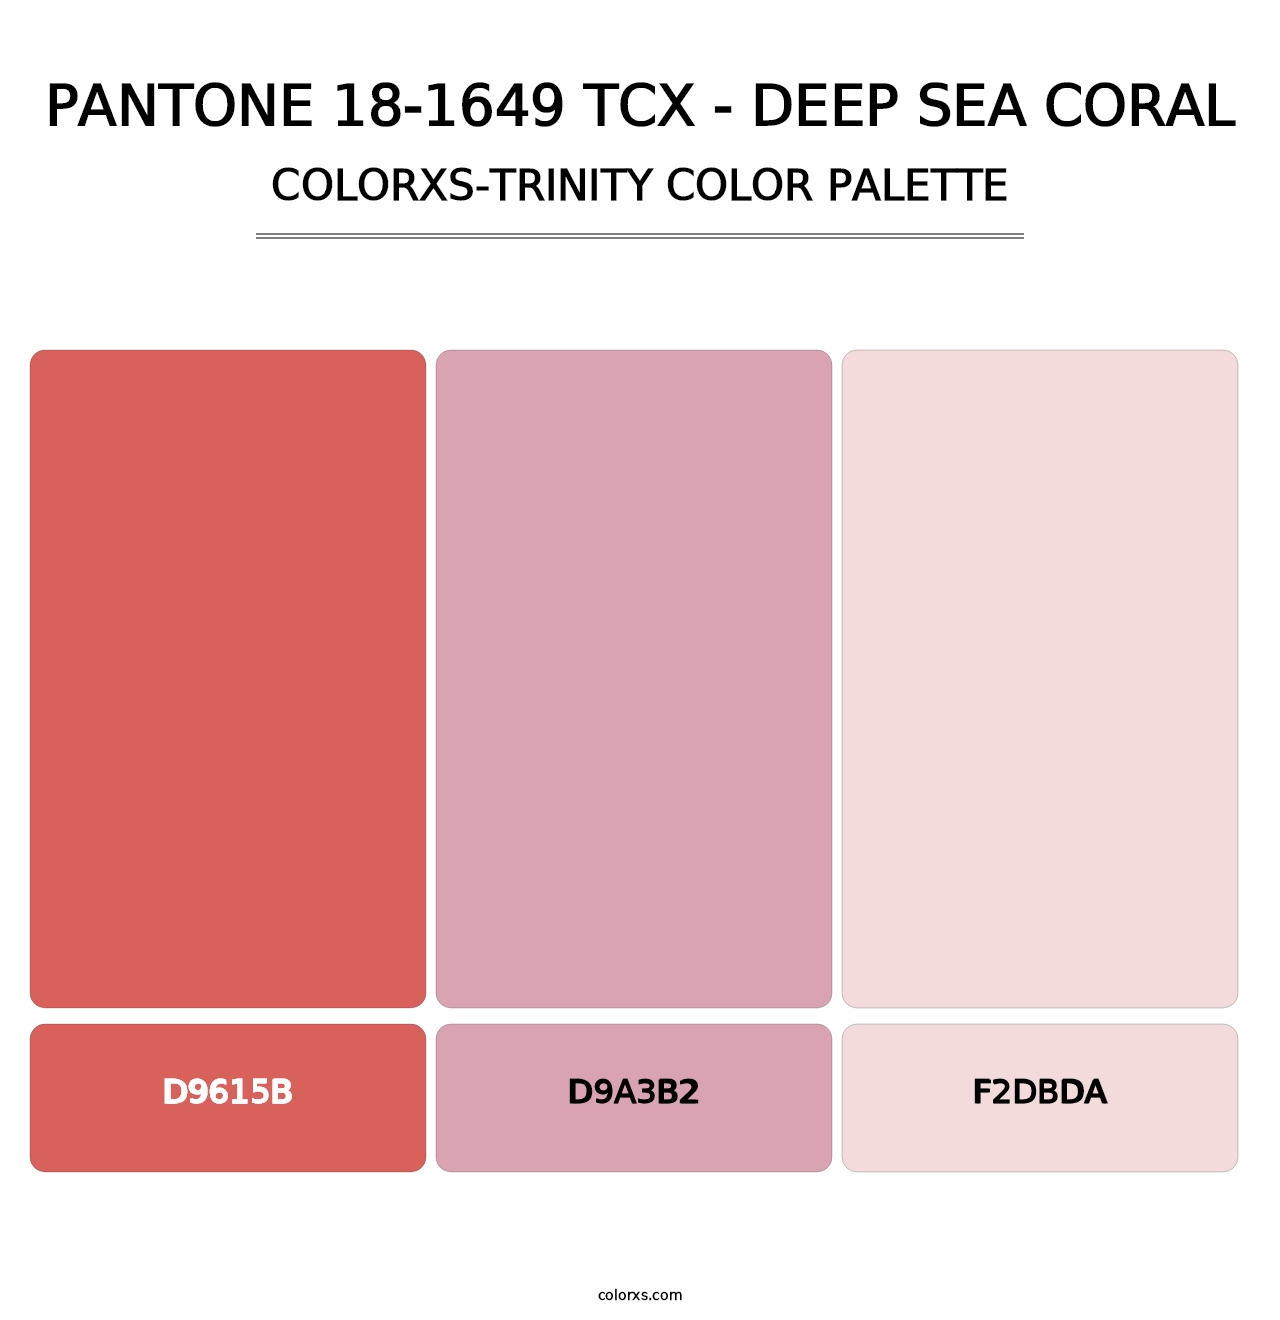 PANTONE 18-1649 TCX - Deep Sea Coral - Colorxs Trinity Palette